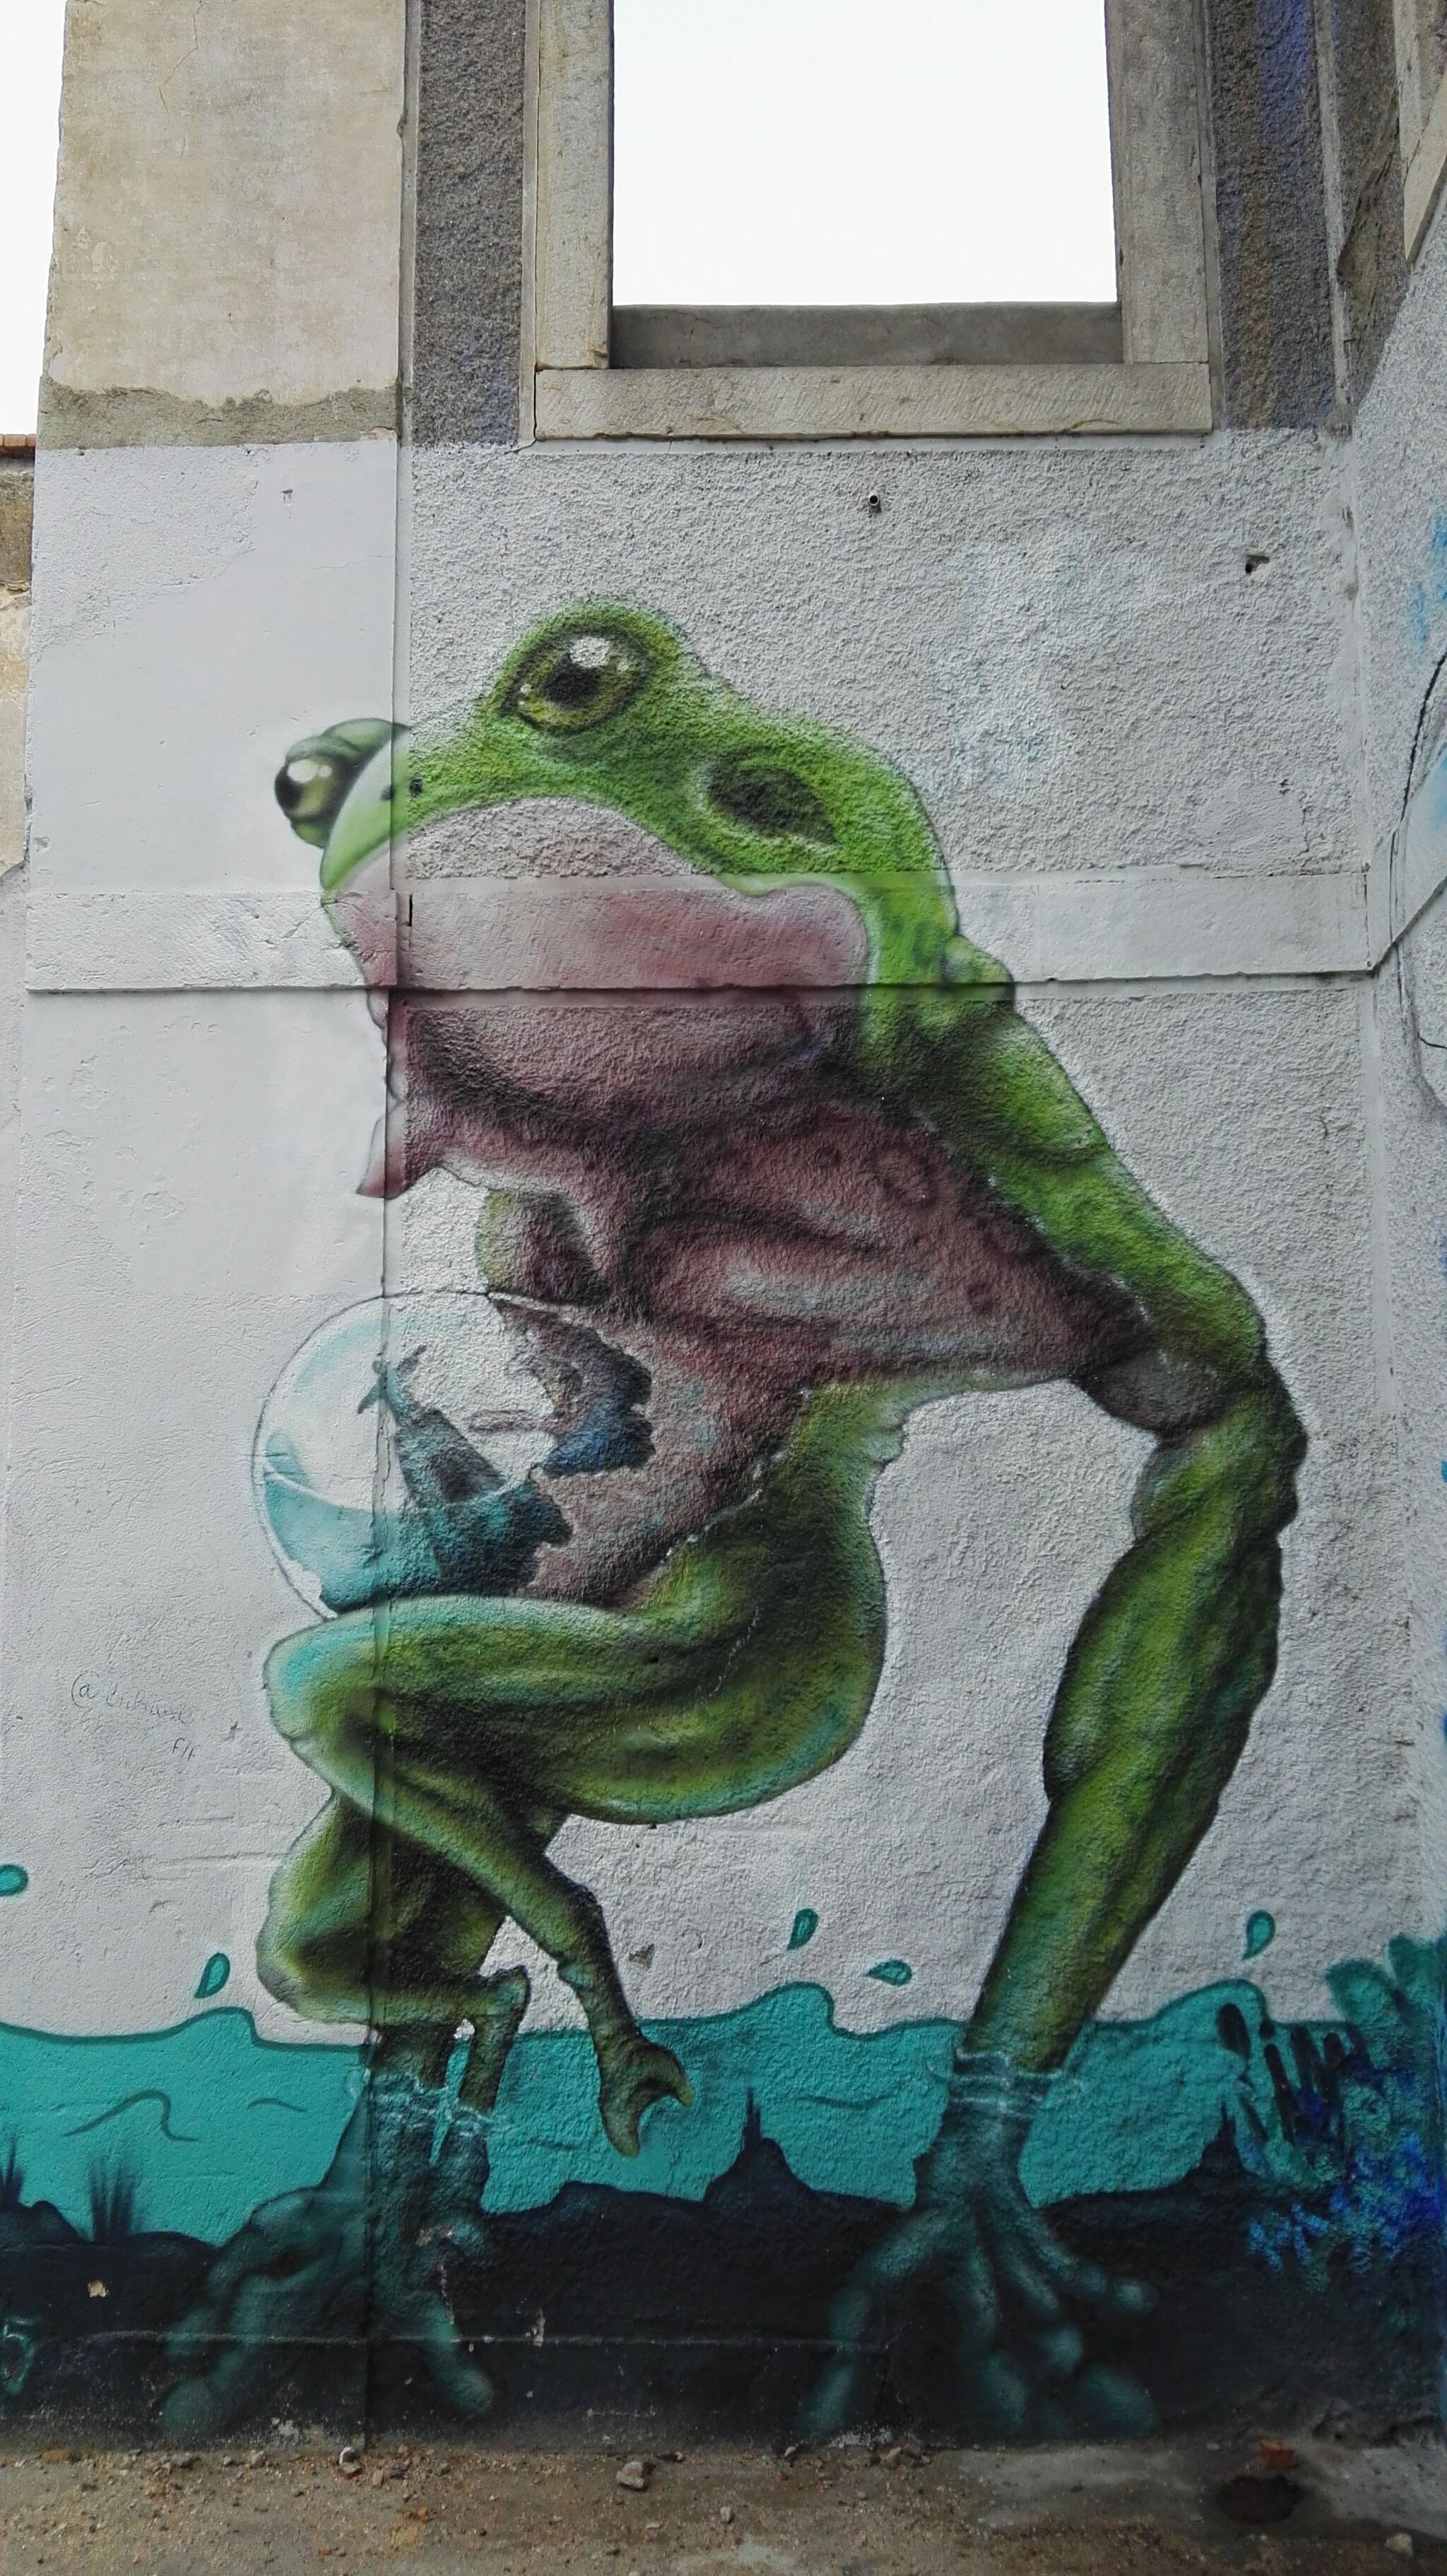 Unknown - Almada&mdash;mister frog